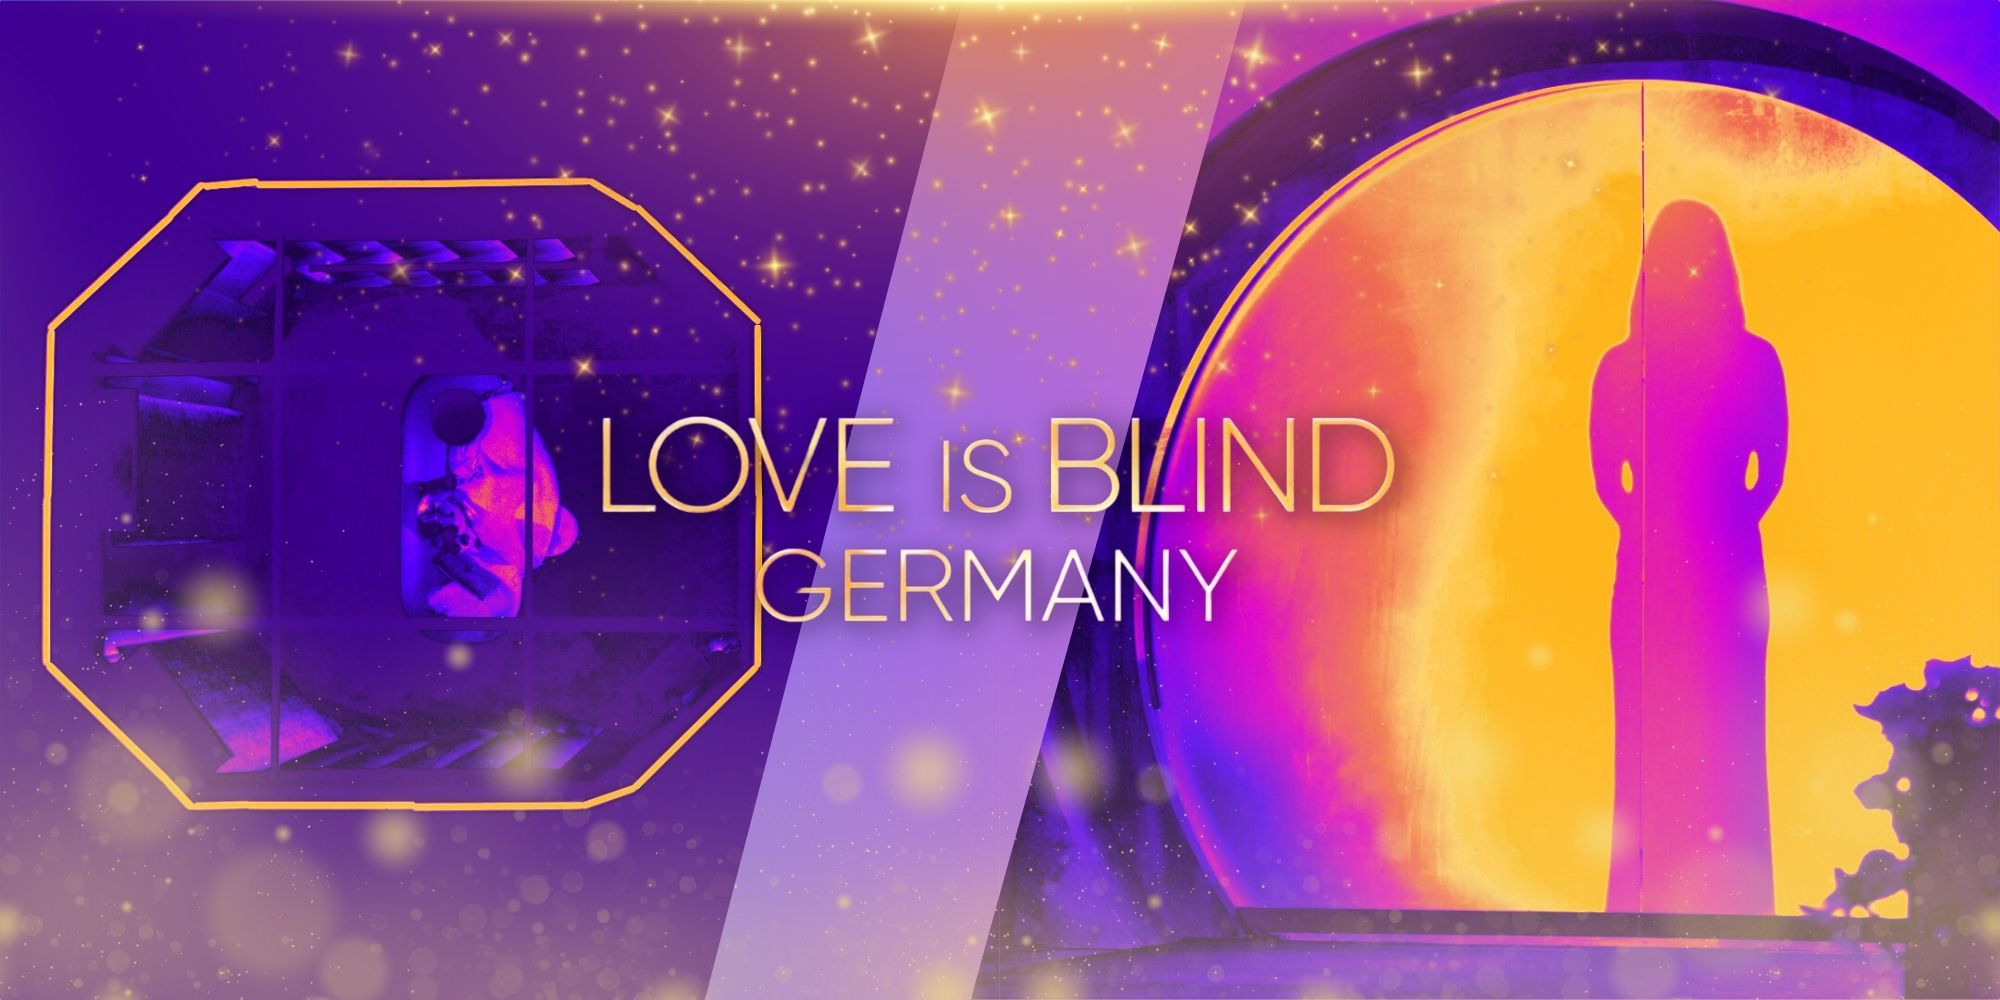  Love is Blind Germany logo.